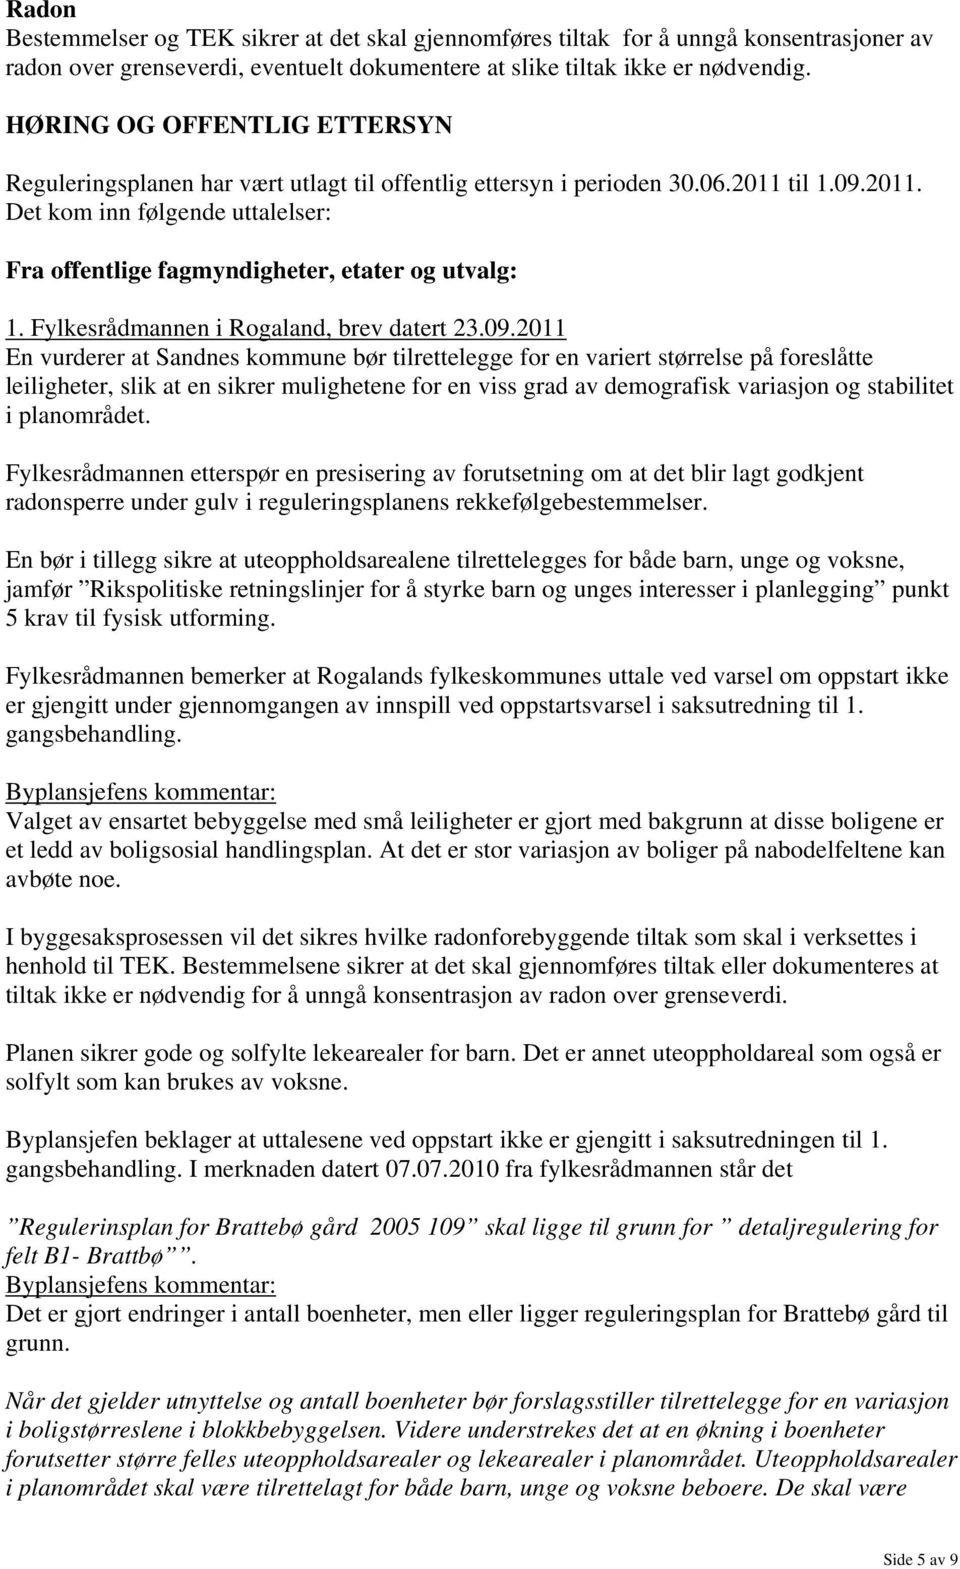 Fylkesrådmannen i Rogaland, brev datert 23.09.